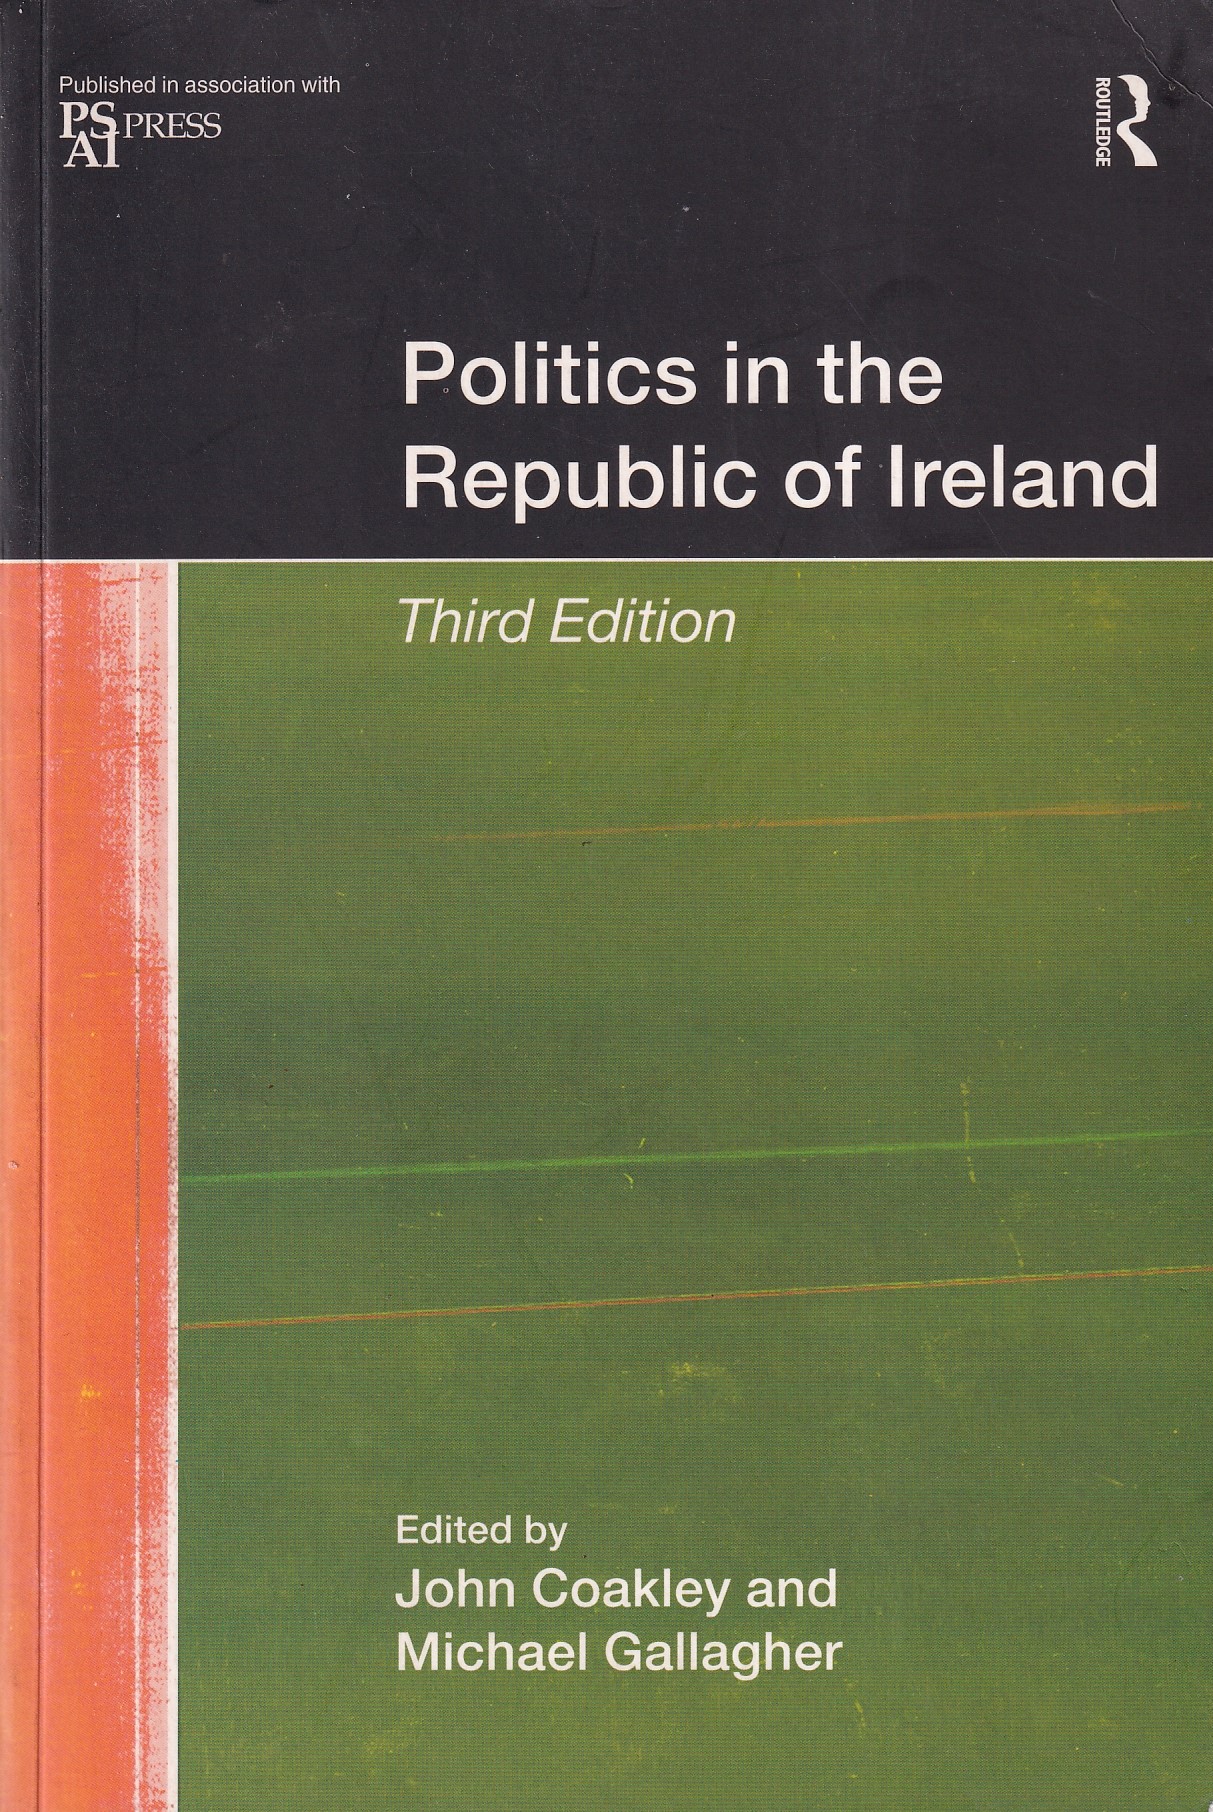 Politics in the Republic of Ireland by John Coakley & Michael Gallagher (eds.)